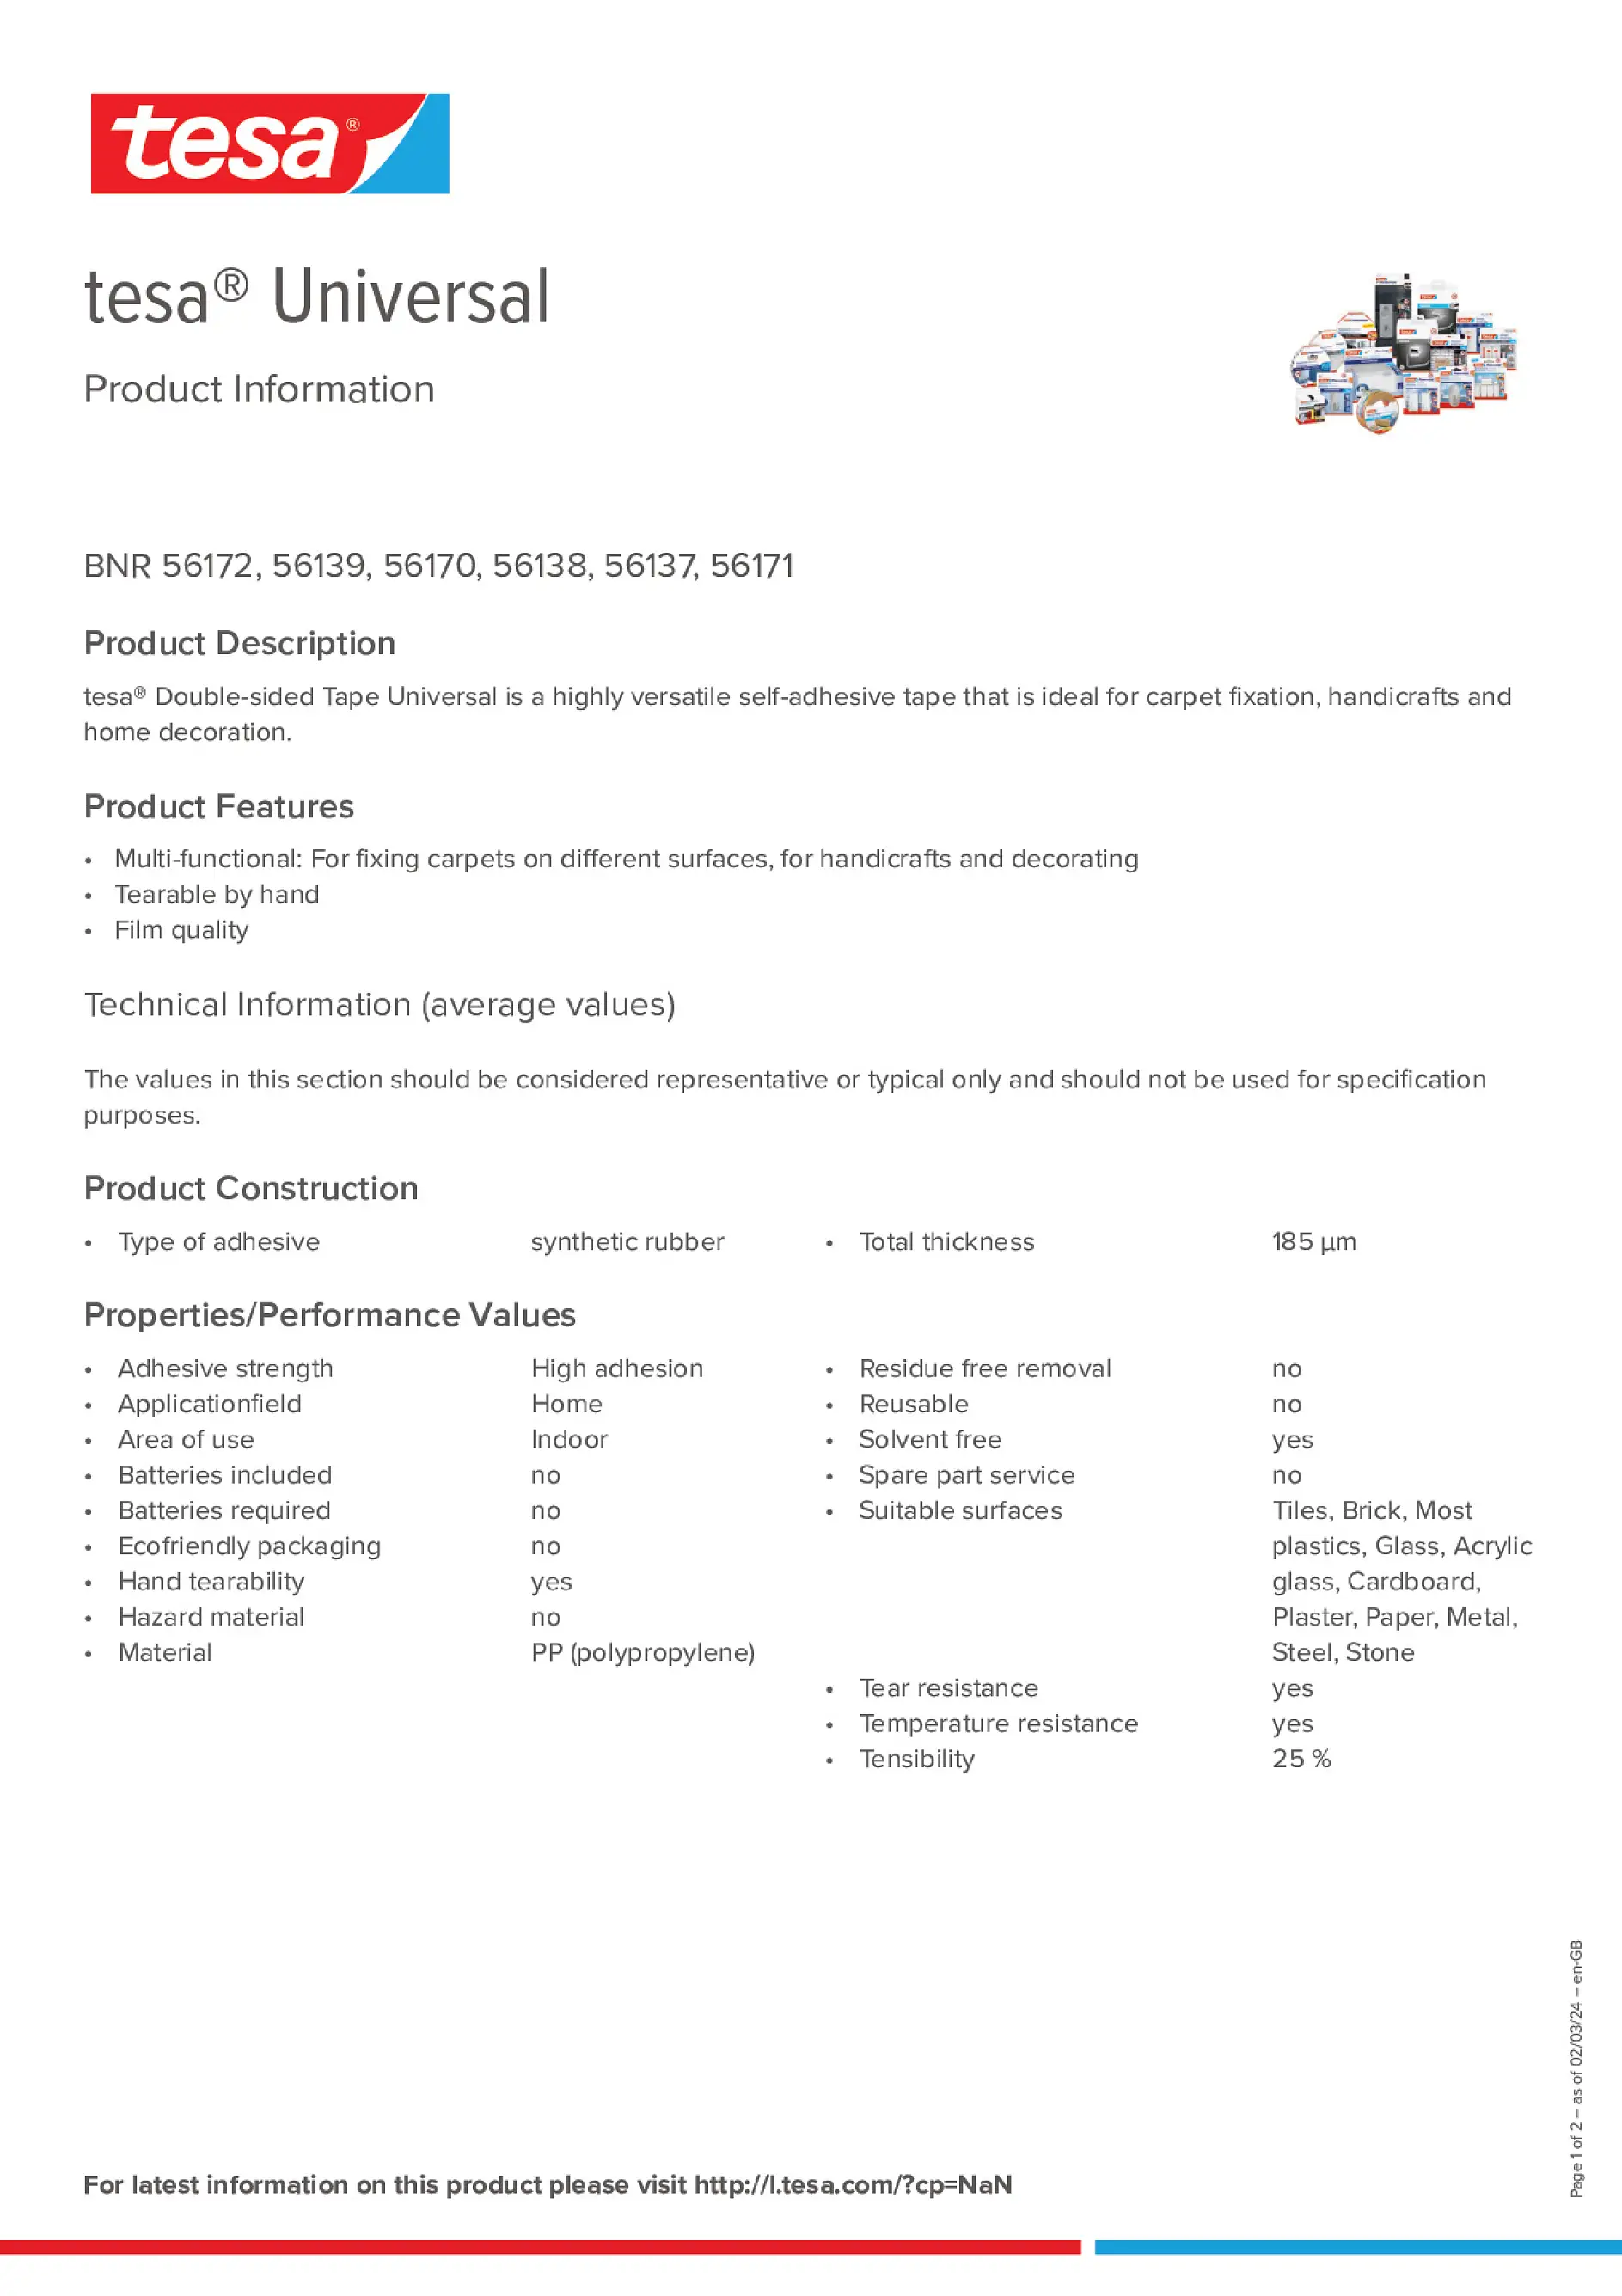 Product information_tesa® 56170_en-GB